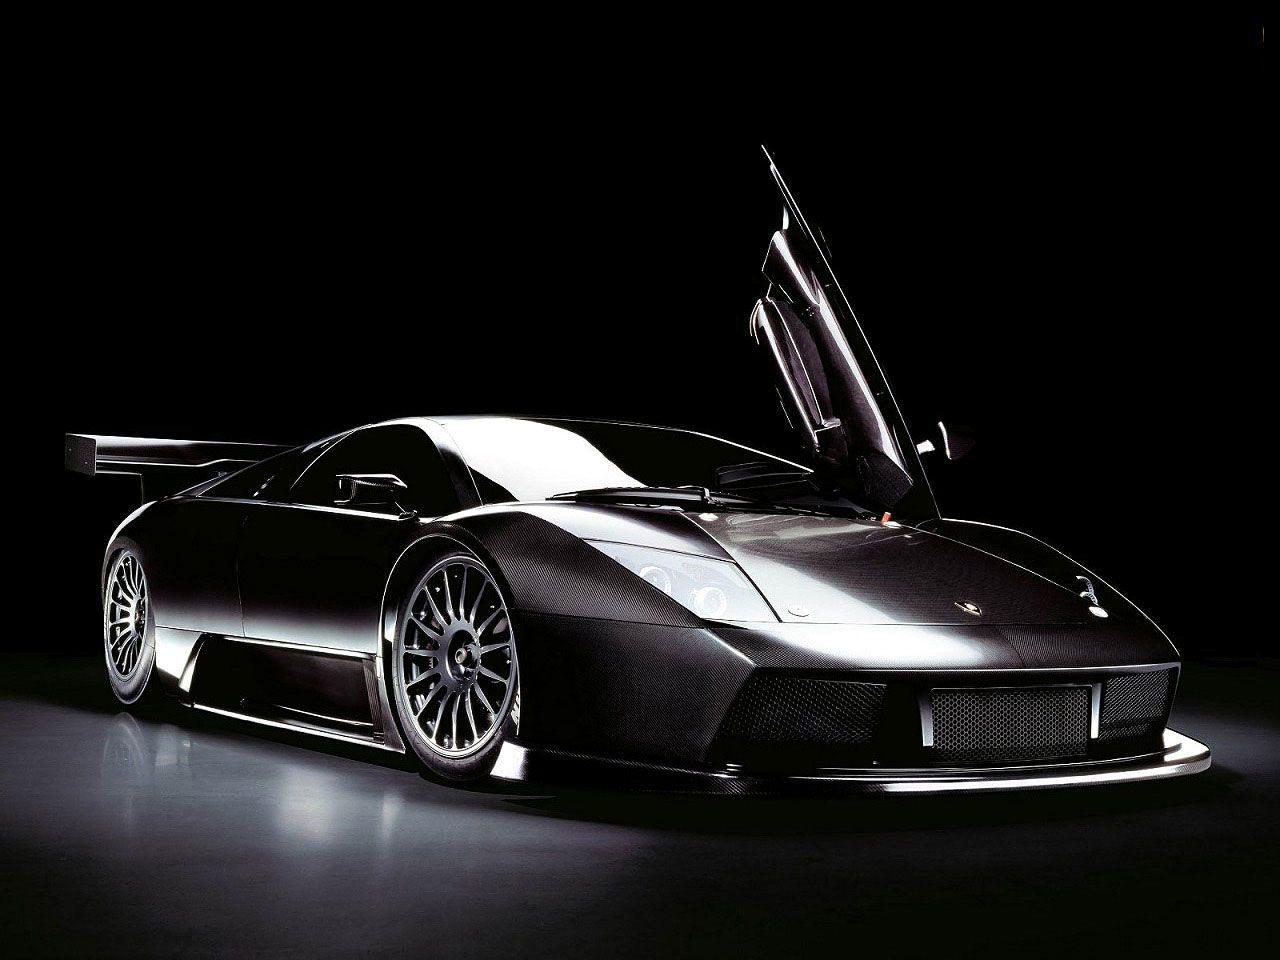 Picture New Great Black Lamborghini Super Car